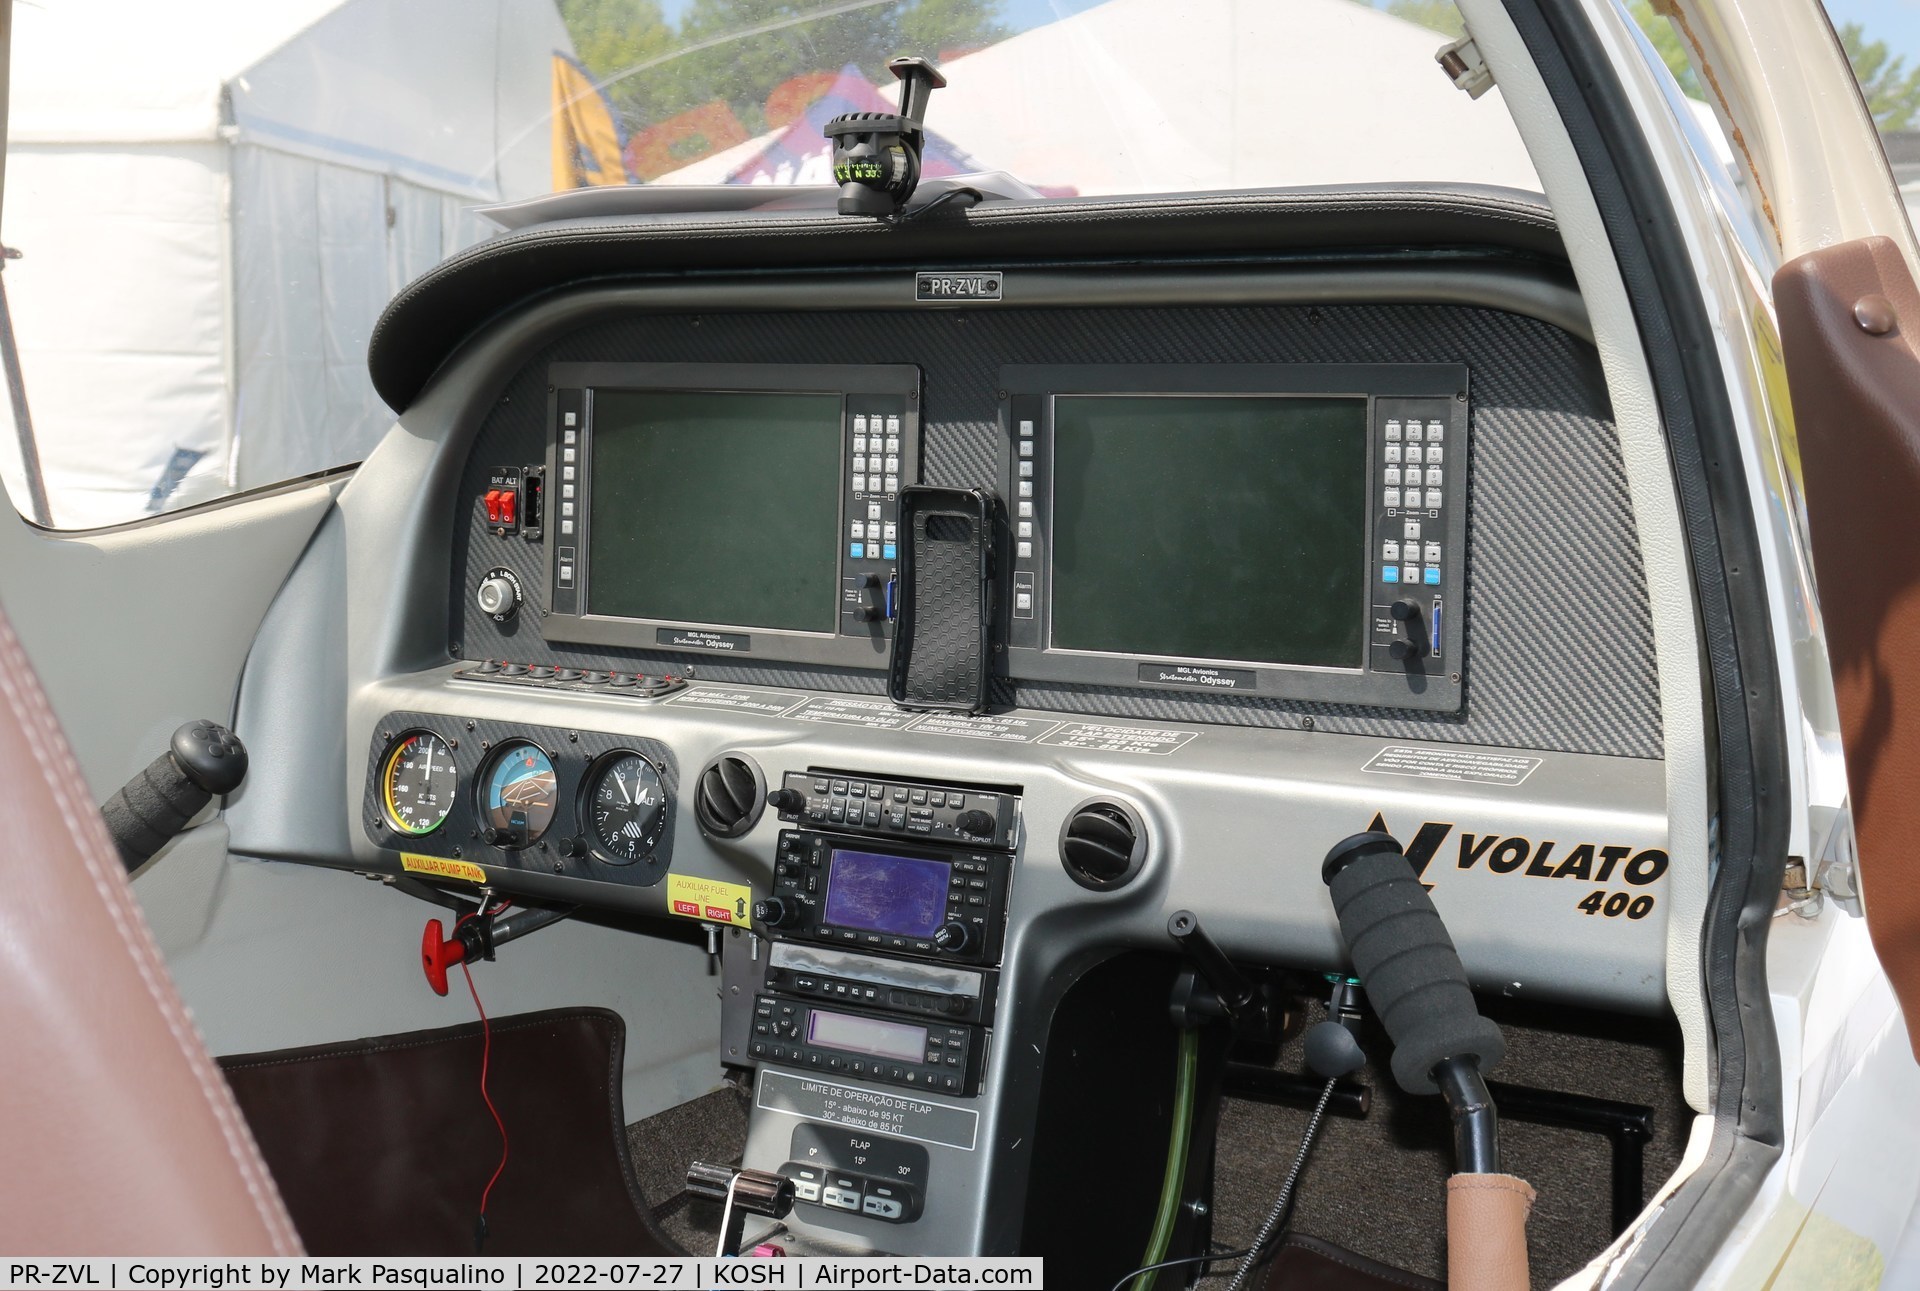 PR-ZVL, 2013 Volato 400 C/N 001, Volato 400